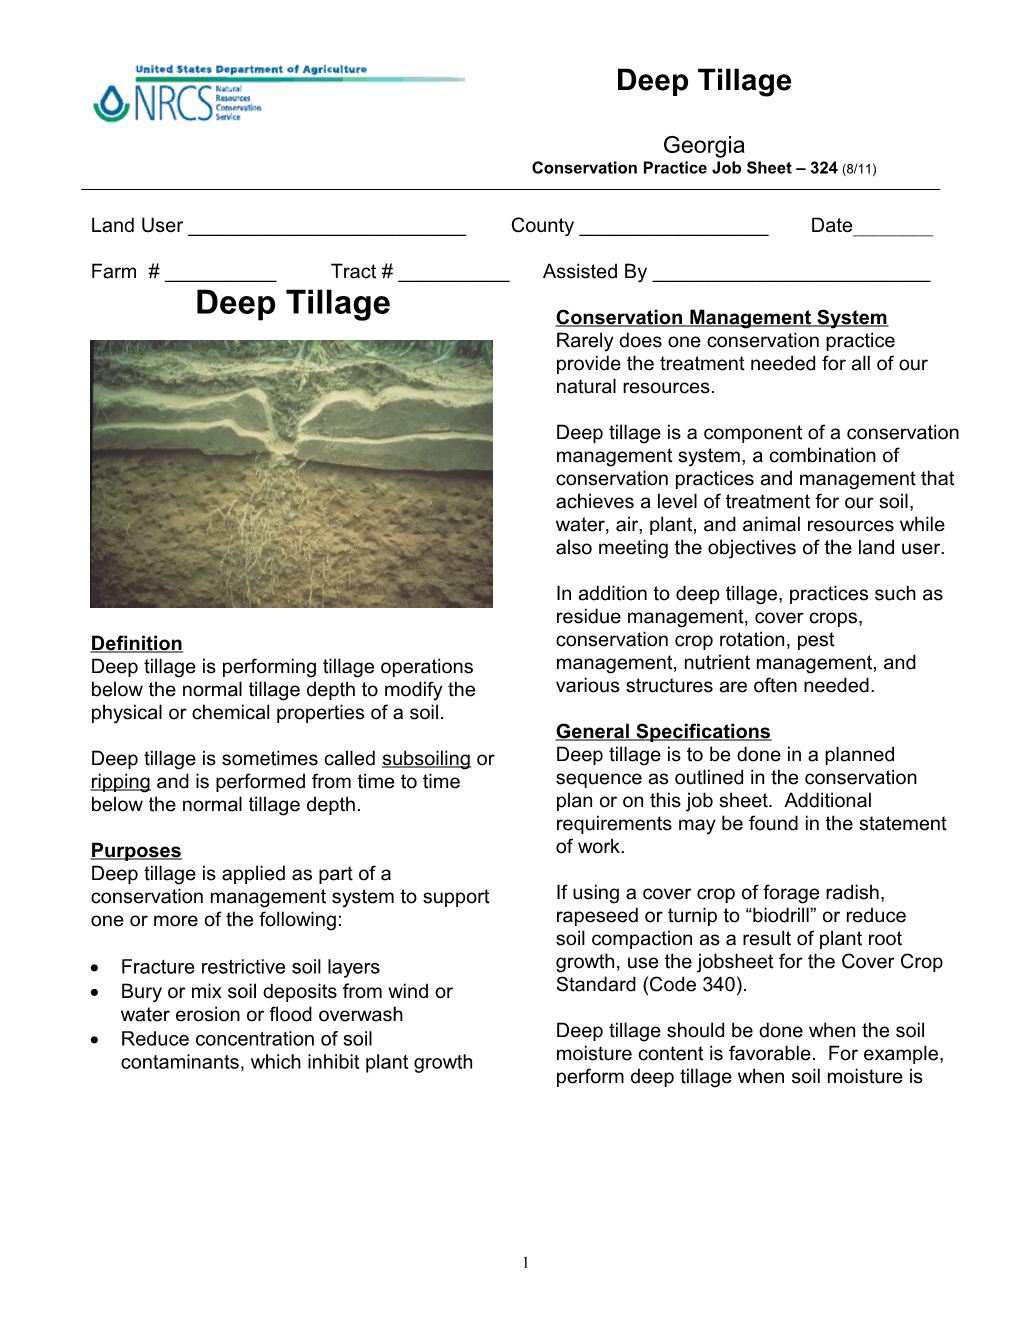 Conservation Practice Job Sheet 324(8/11)